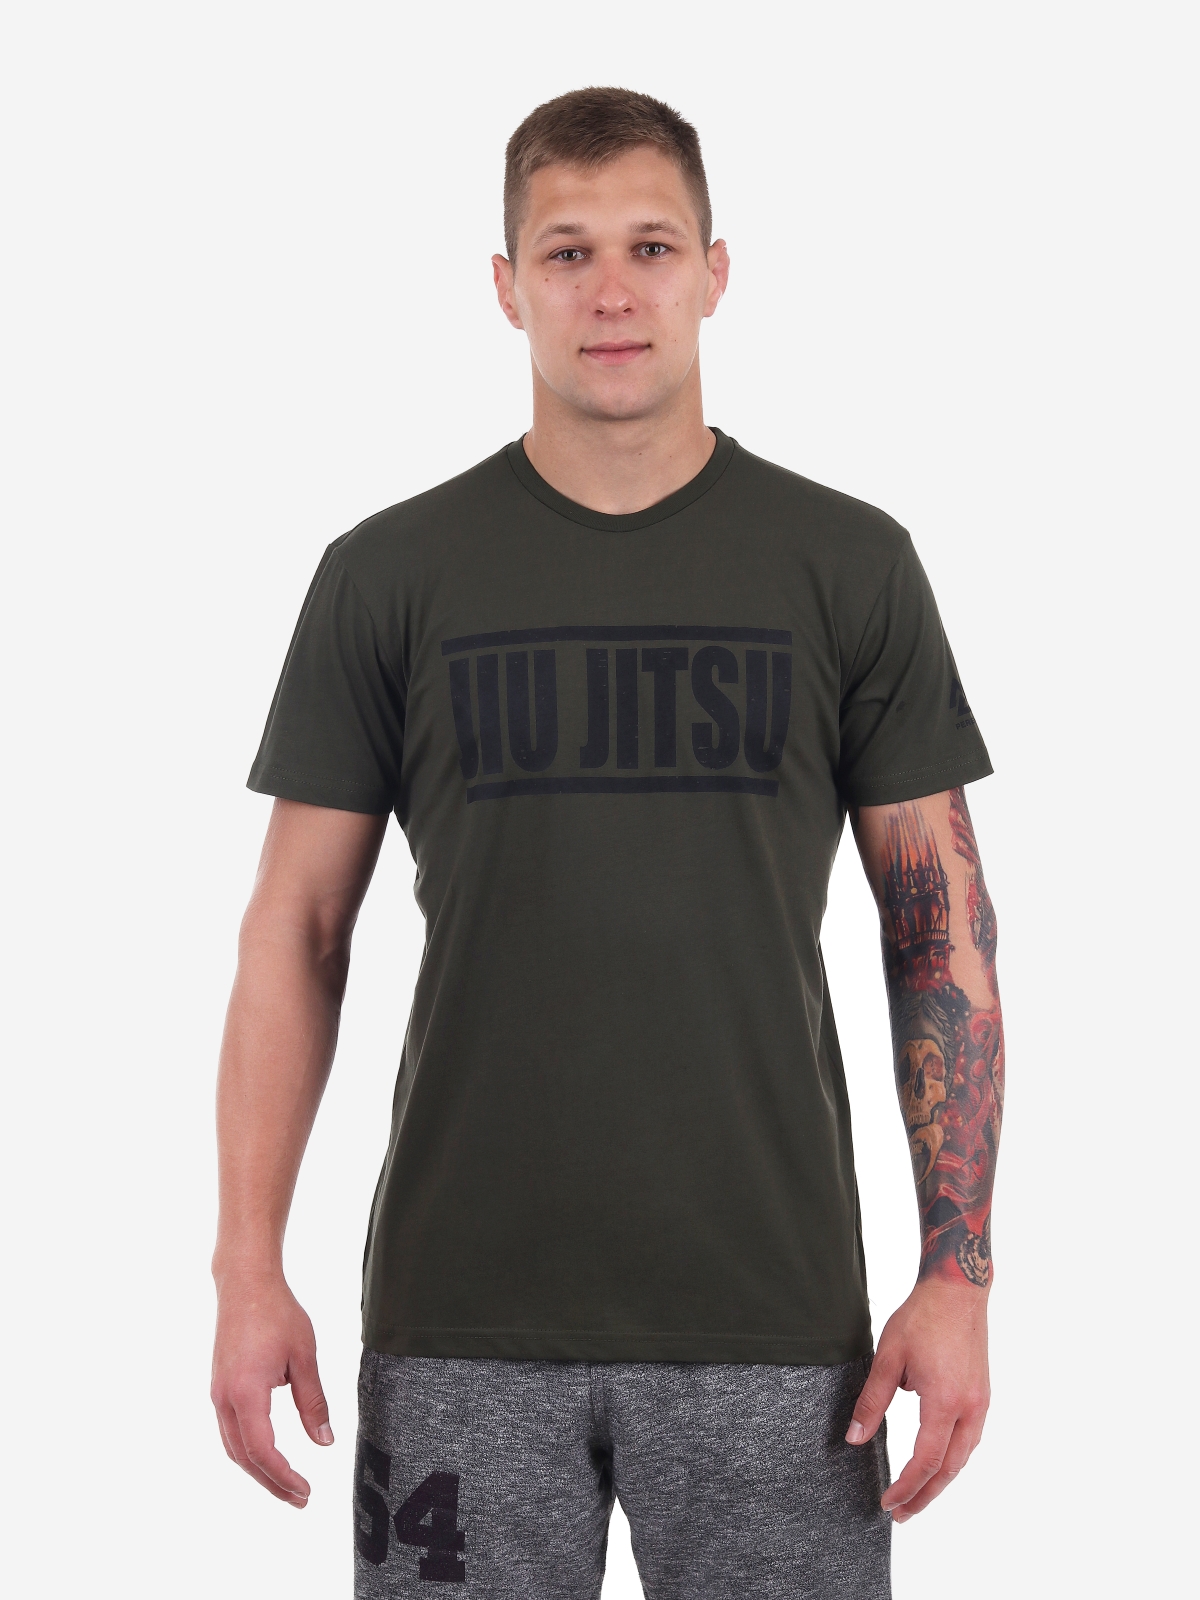 Peresvit Jiu-Jitsu T-Shirt Military Green